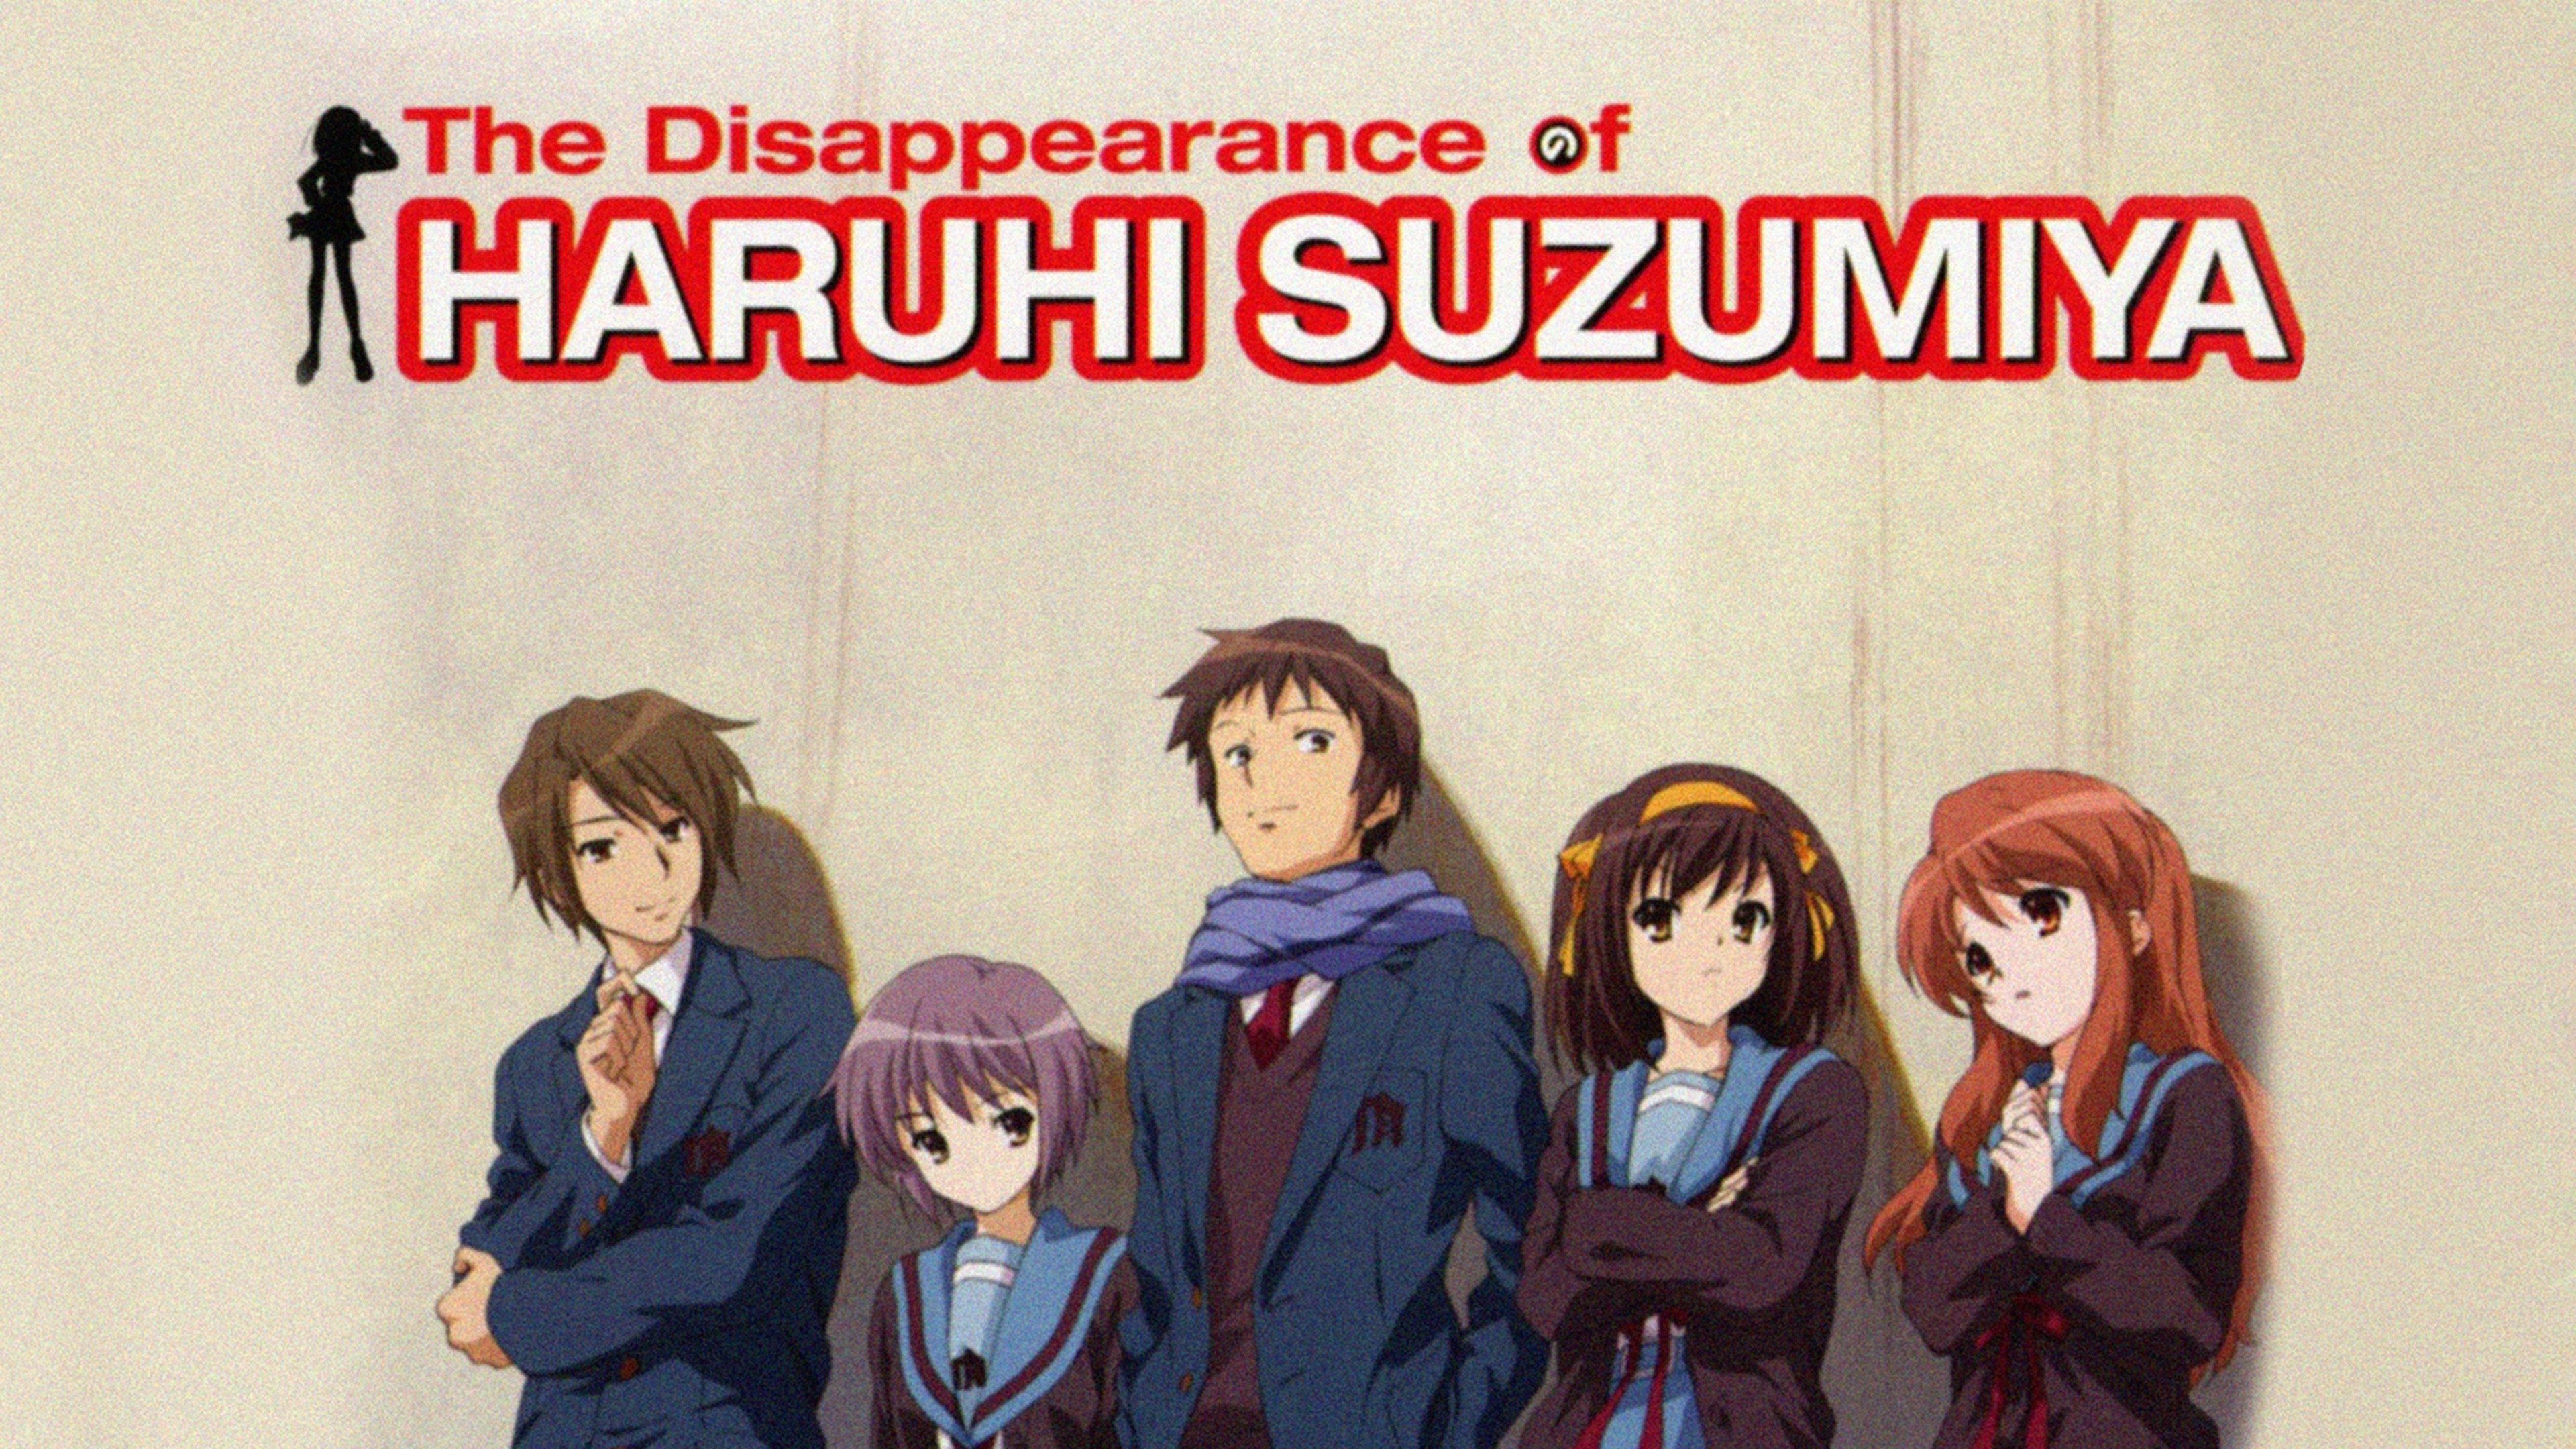 The Disappearance of Haruhi Suzumiya Wallpaper by eaZyHD on DeviantArt